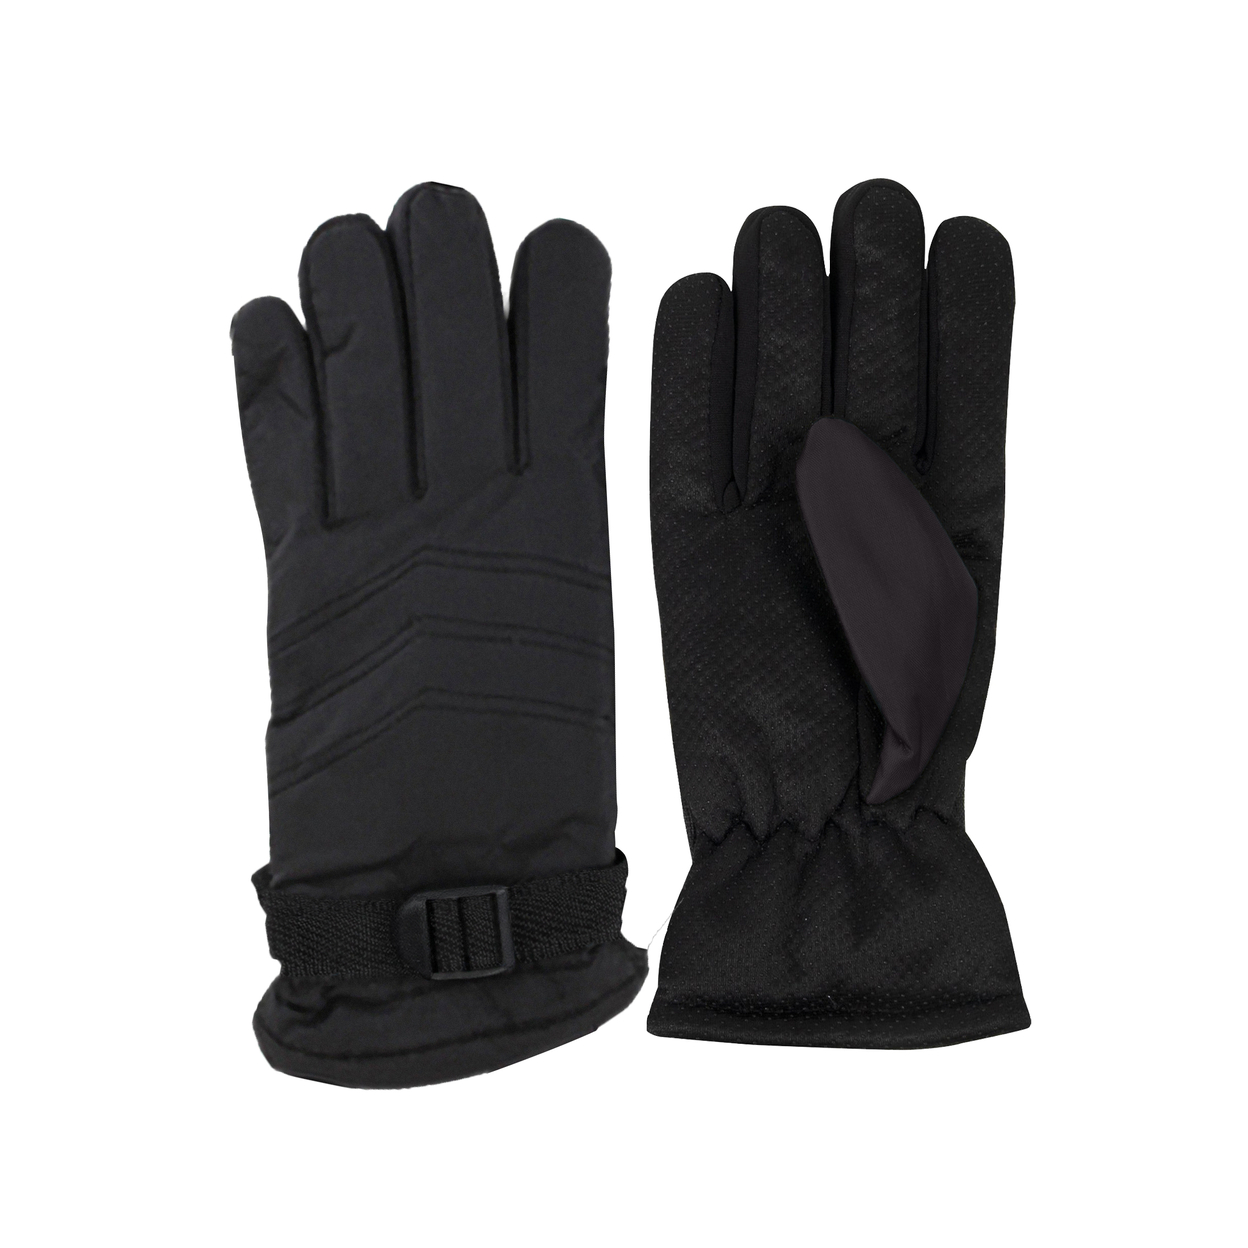 4-Pairs Women's Cozy Fur Lined Snow Ski Warm Winter Gloves - Black